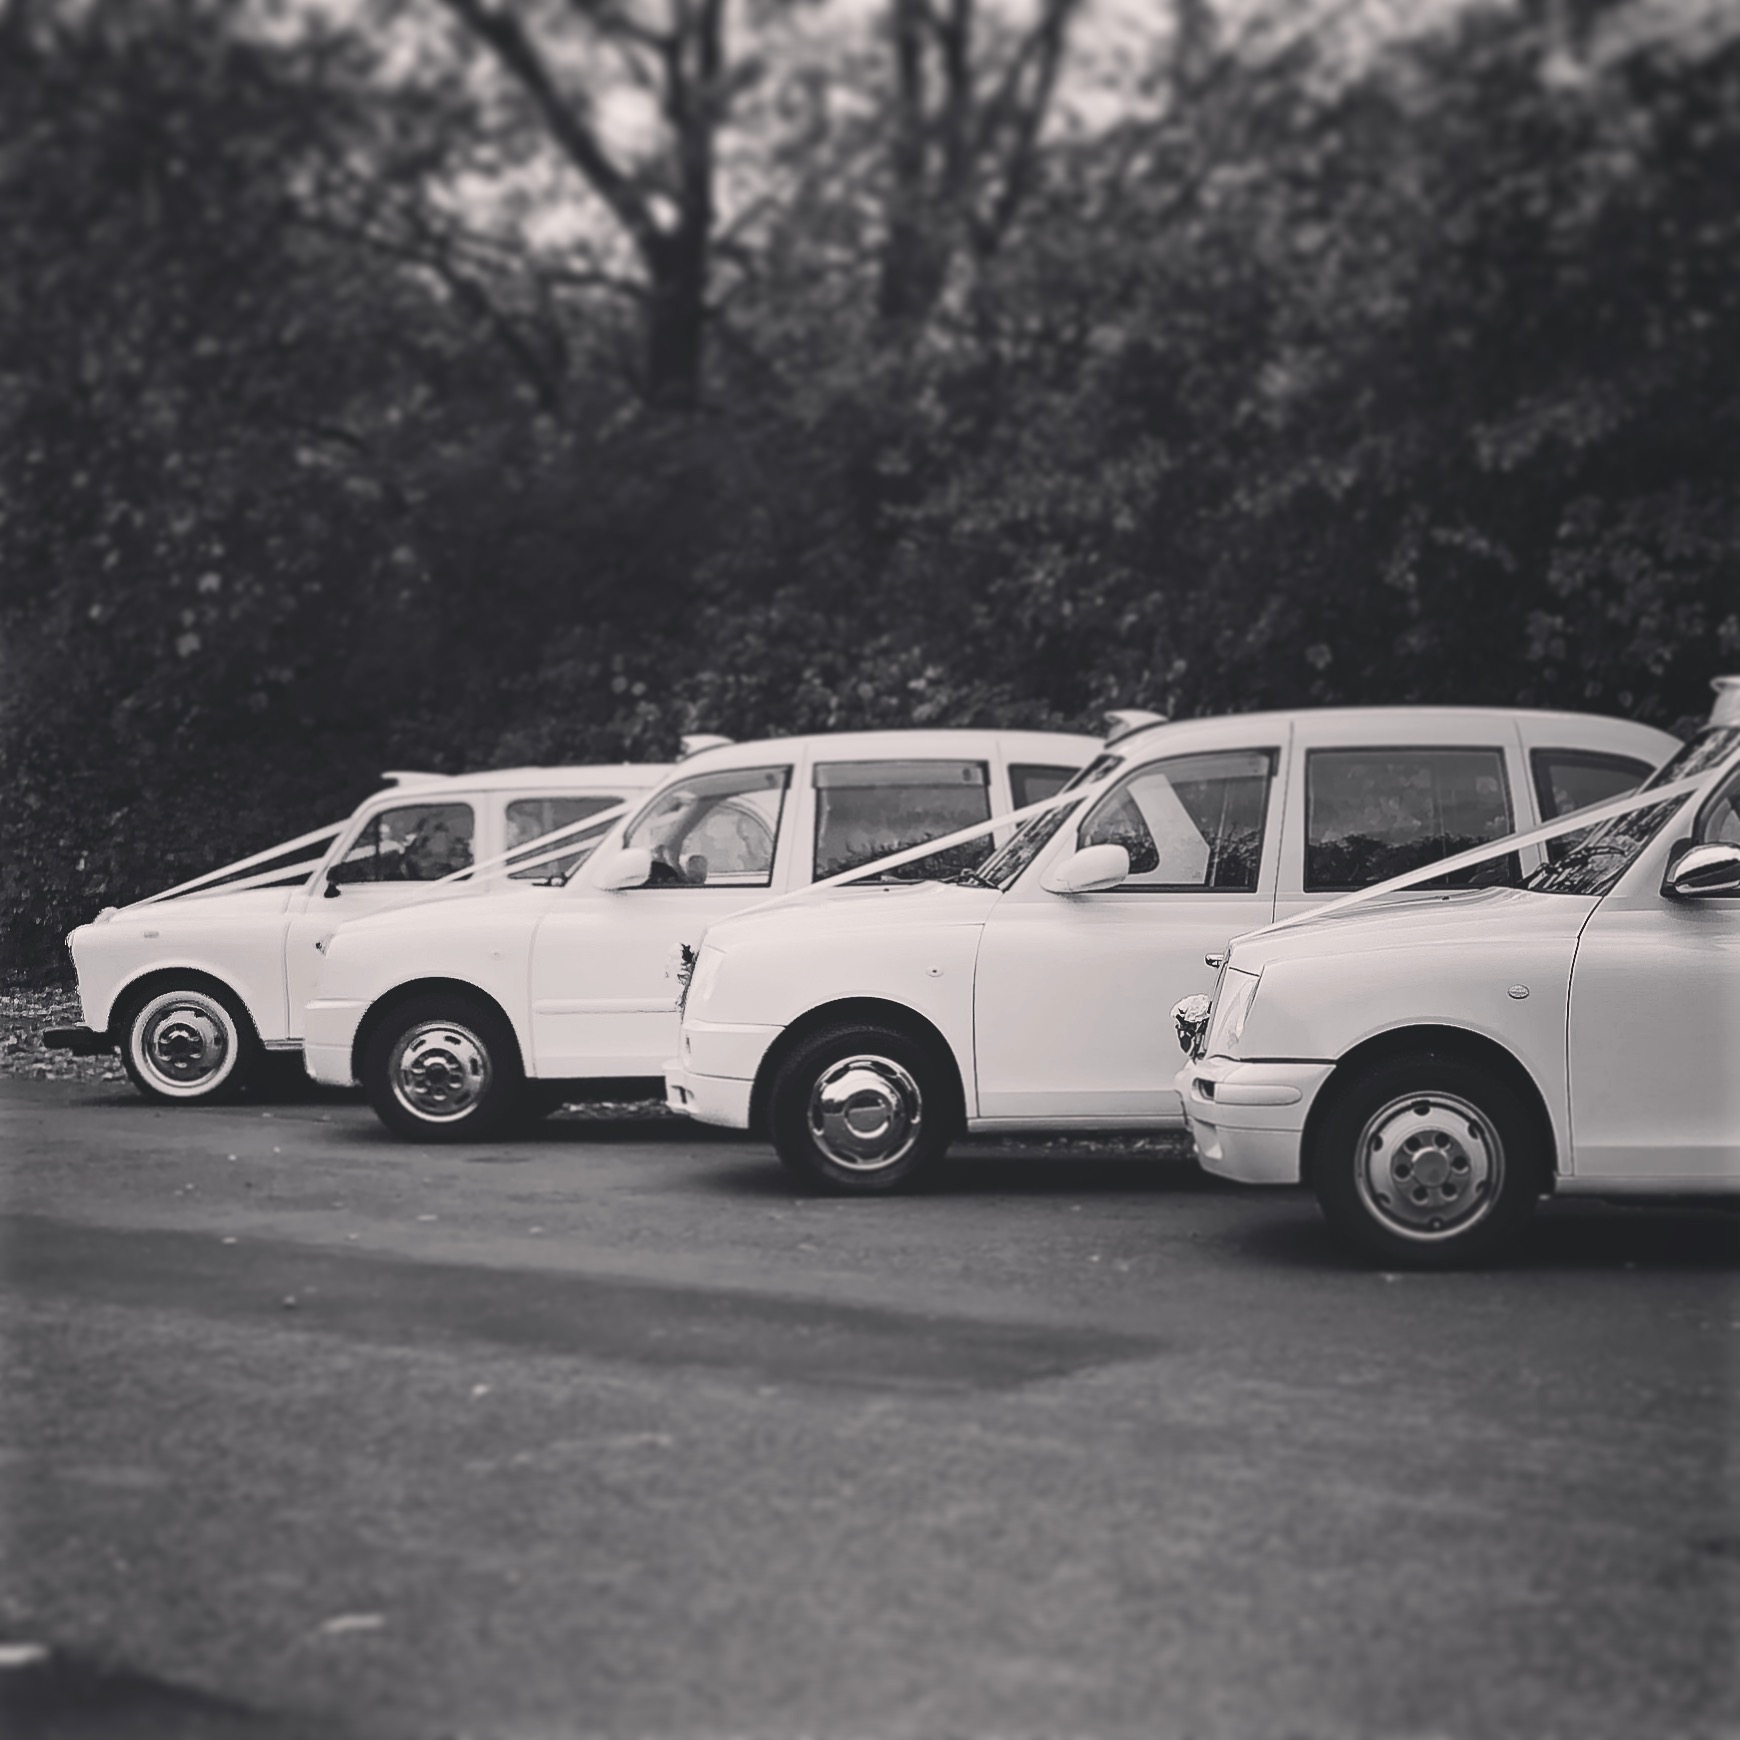 trafford wedding cars taxis  idotaxi wedding taxis